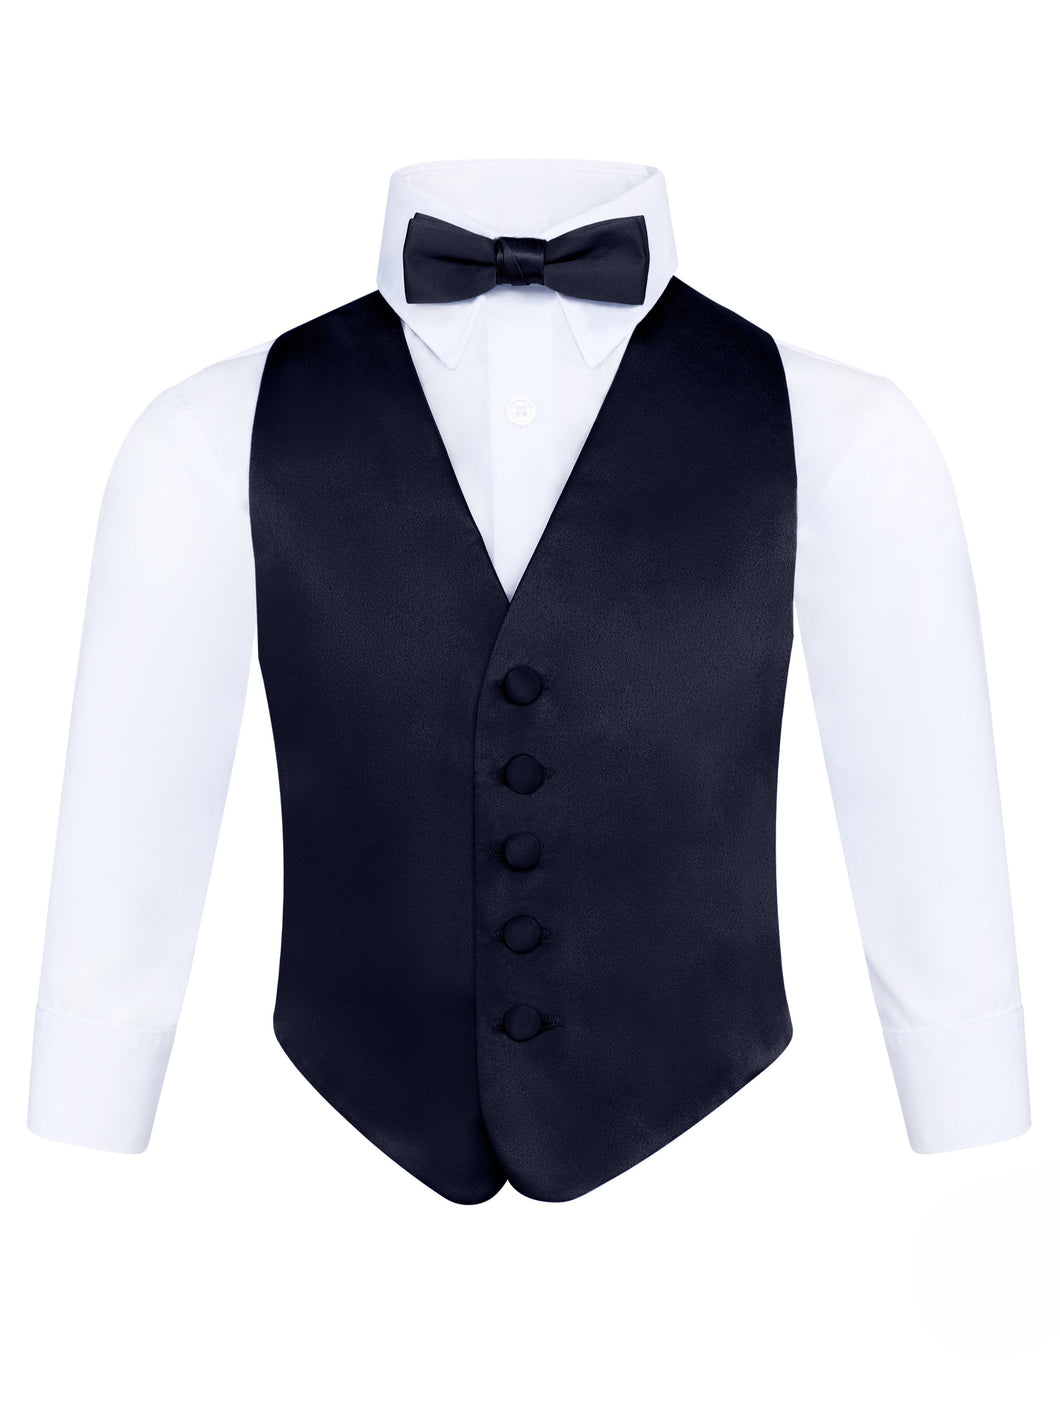 S.H. Churchill & Co. Boy's 3 Piece Navy Backless Formal Vest Set - Includes Vest, Bow Tie, Pocket Square for Tuxedo or Suit